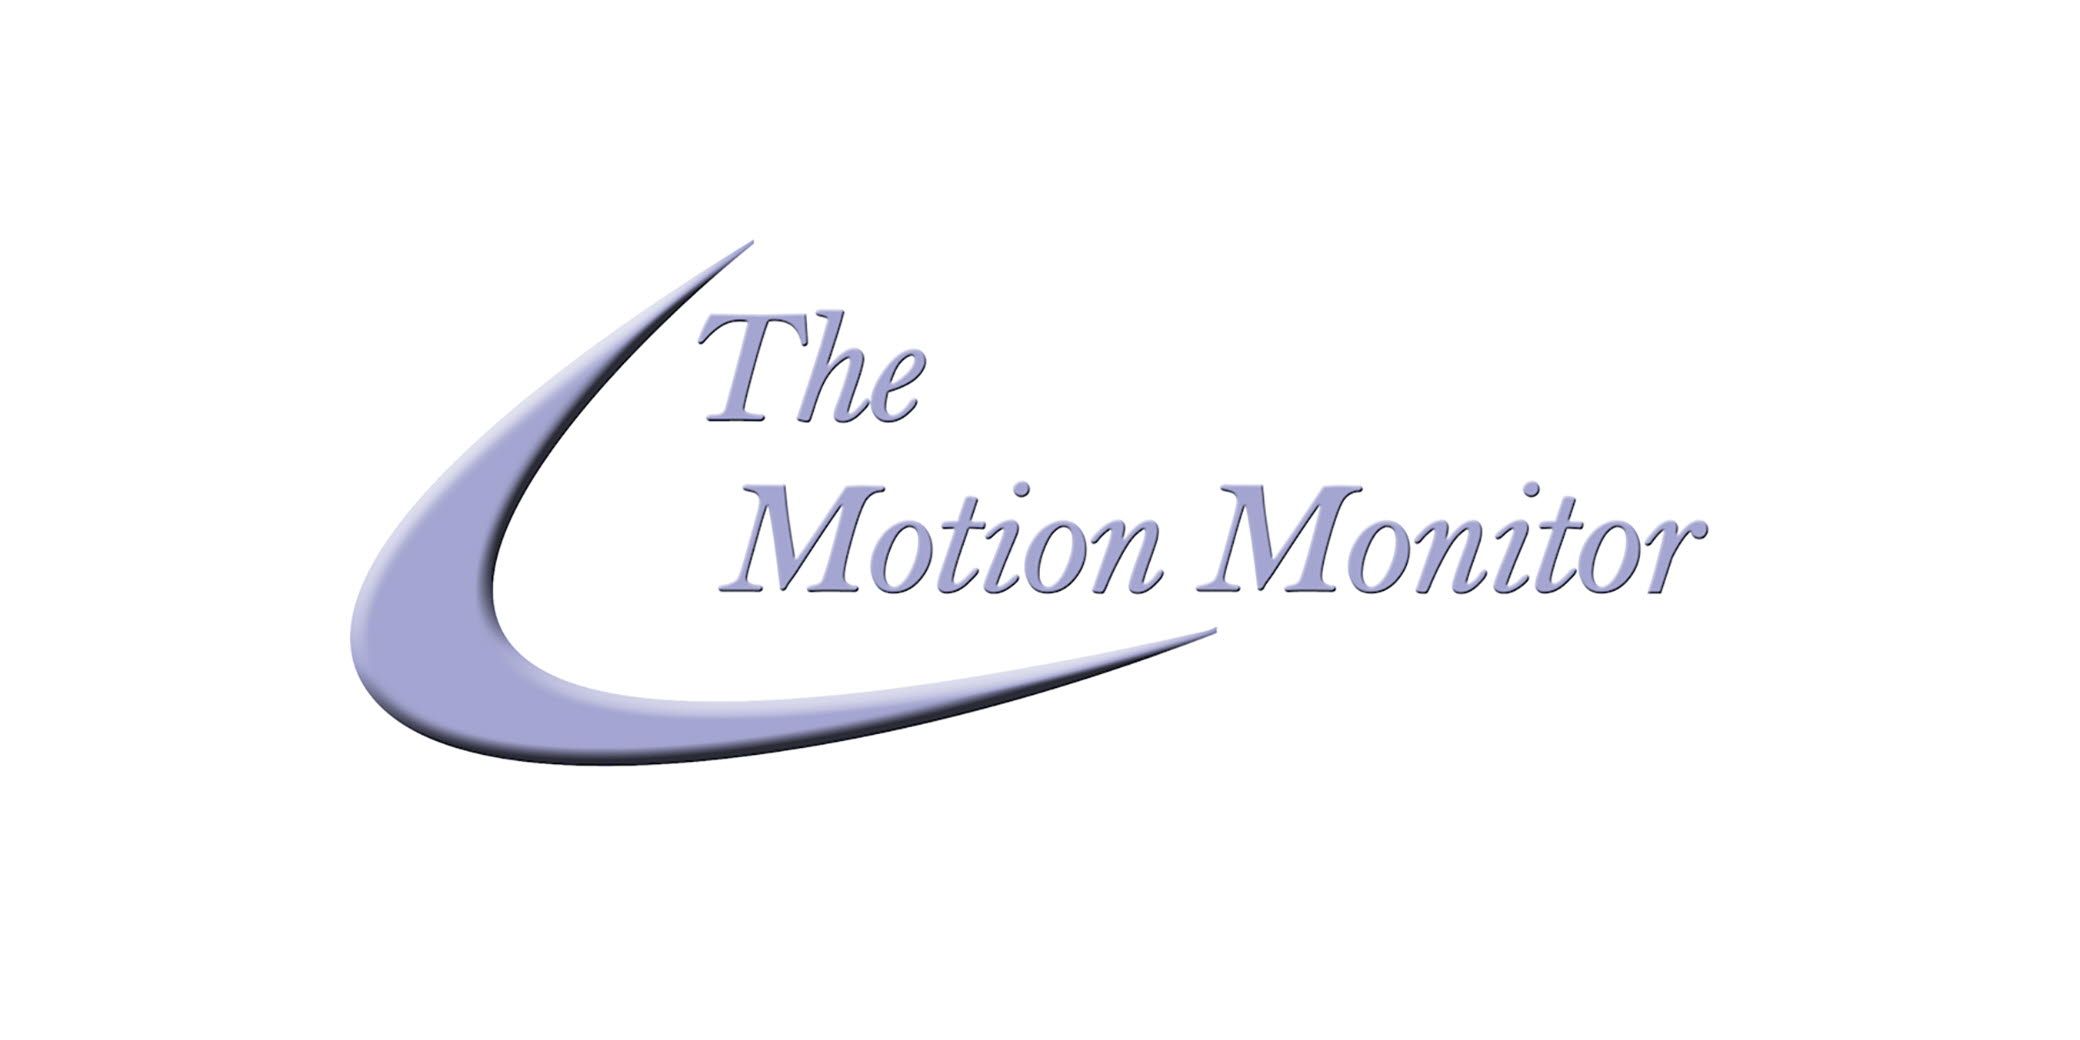 Motion monitor logo